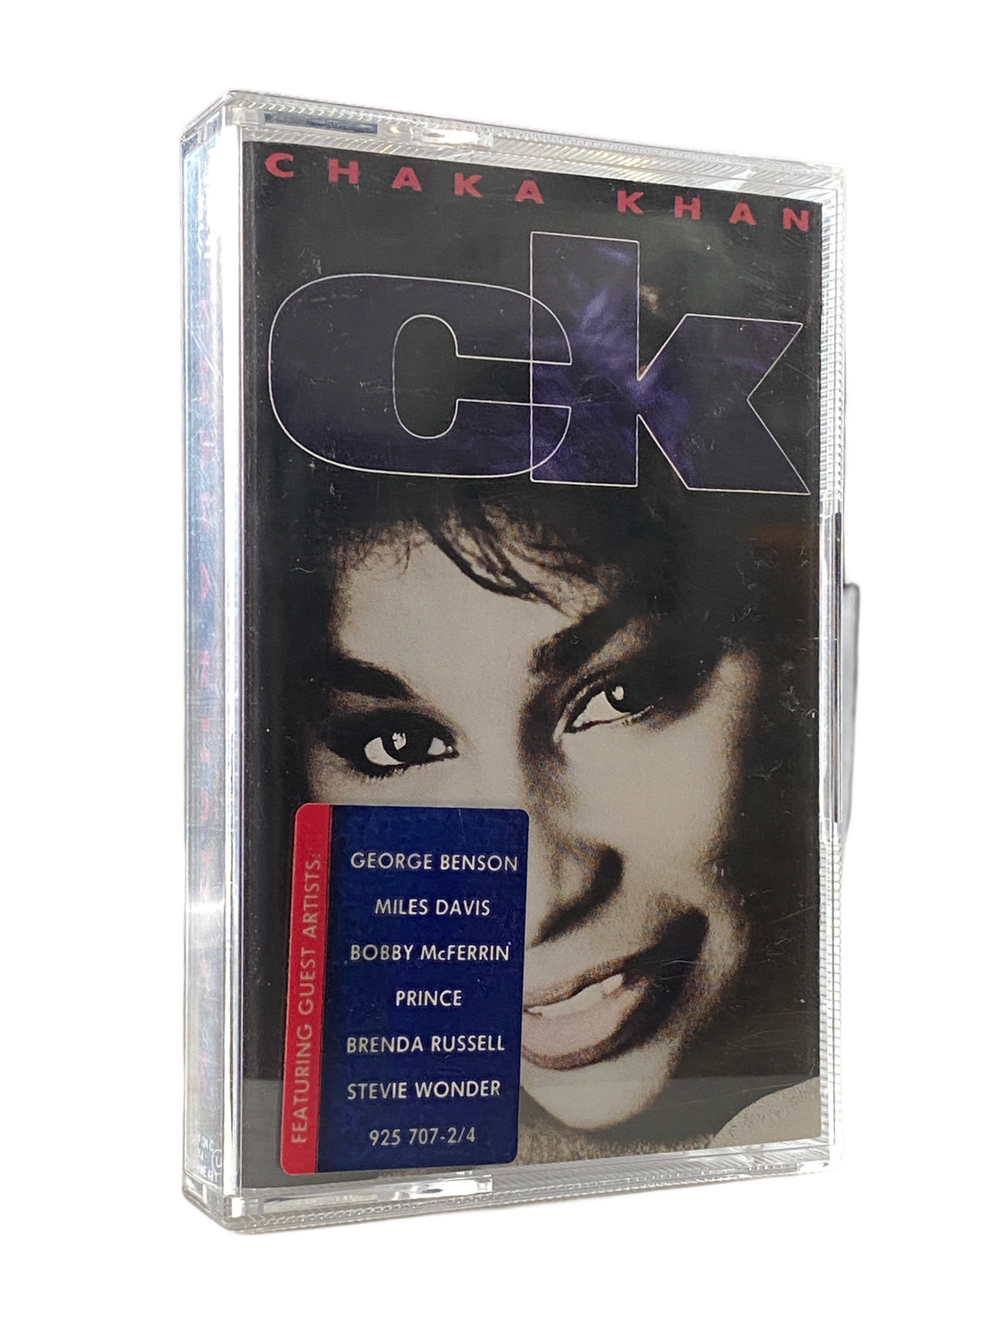 Prince – Chaka Khan C.K. Original Cassette Tape UK EU 1988 Release Prince